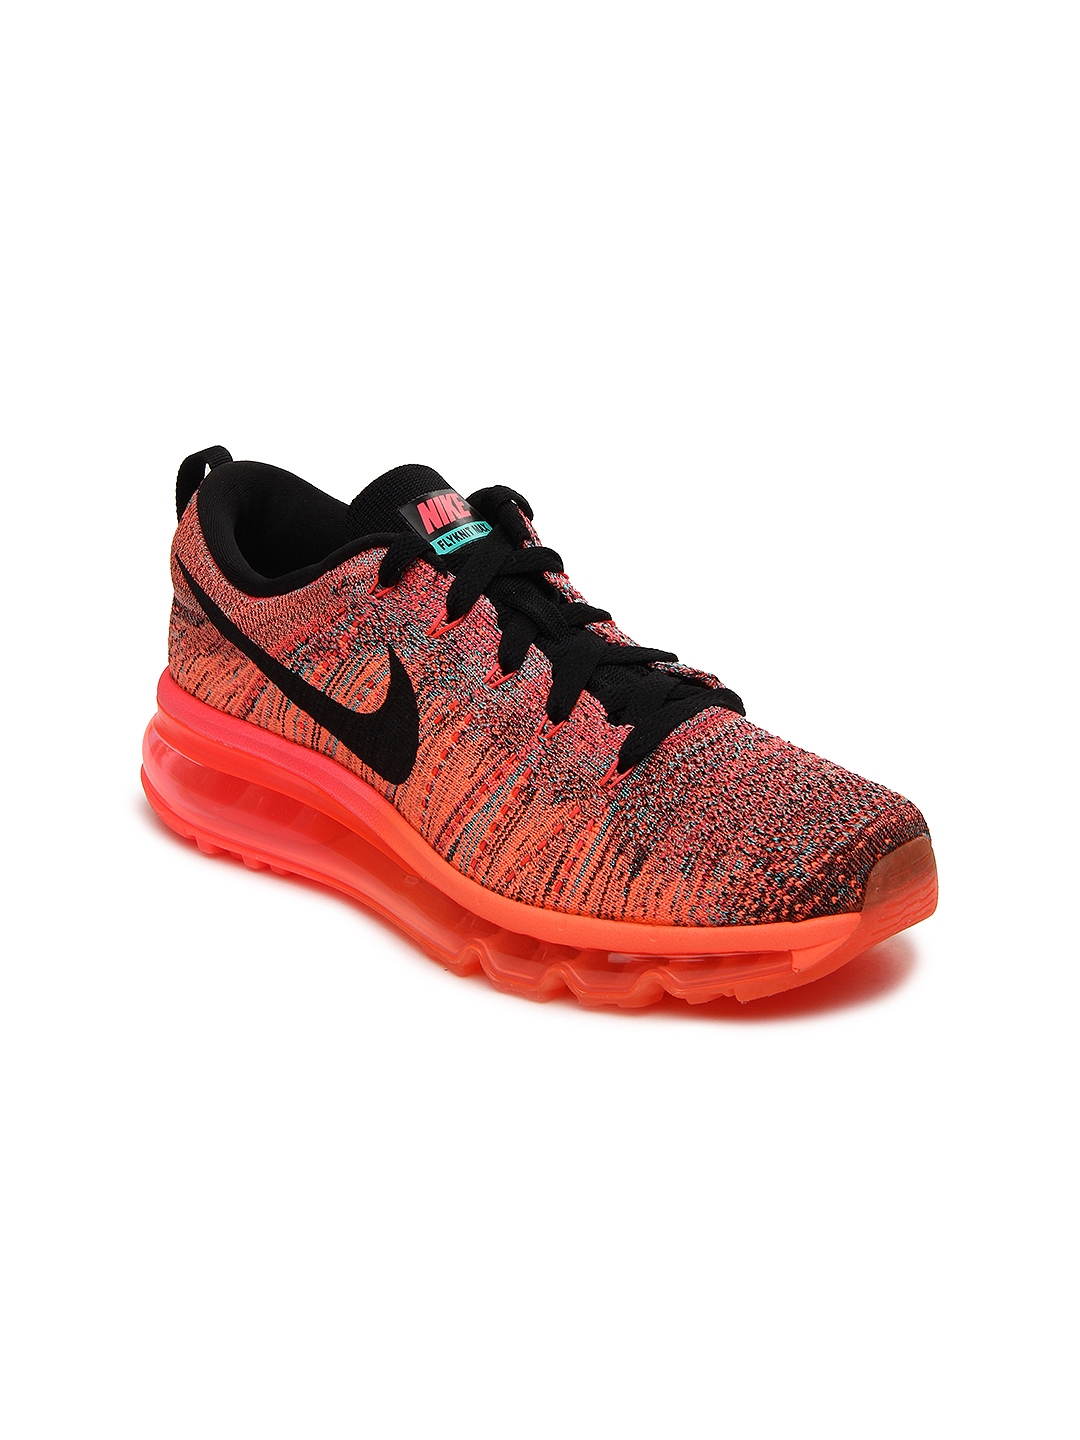 Buy Nike Women Fluorescent Orange Flyknit Max Running Shoes - Sports ...